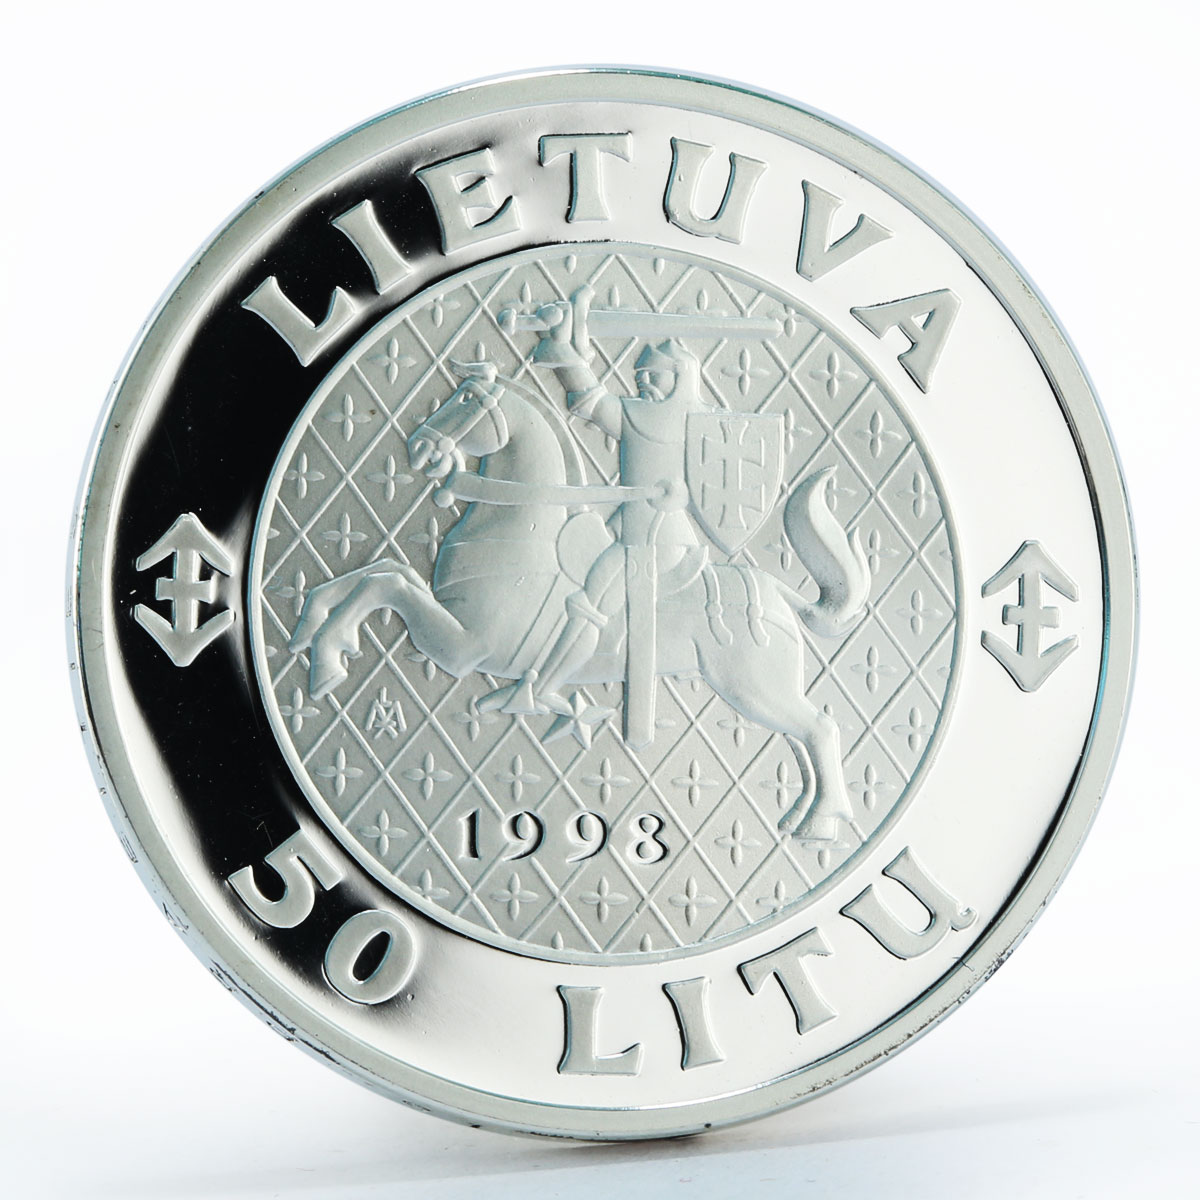 Lithuania 50 litu The Grand Duke Algirdas silver proof coin 1998